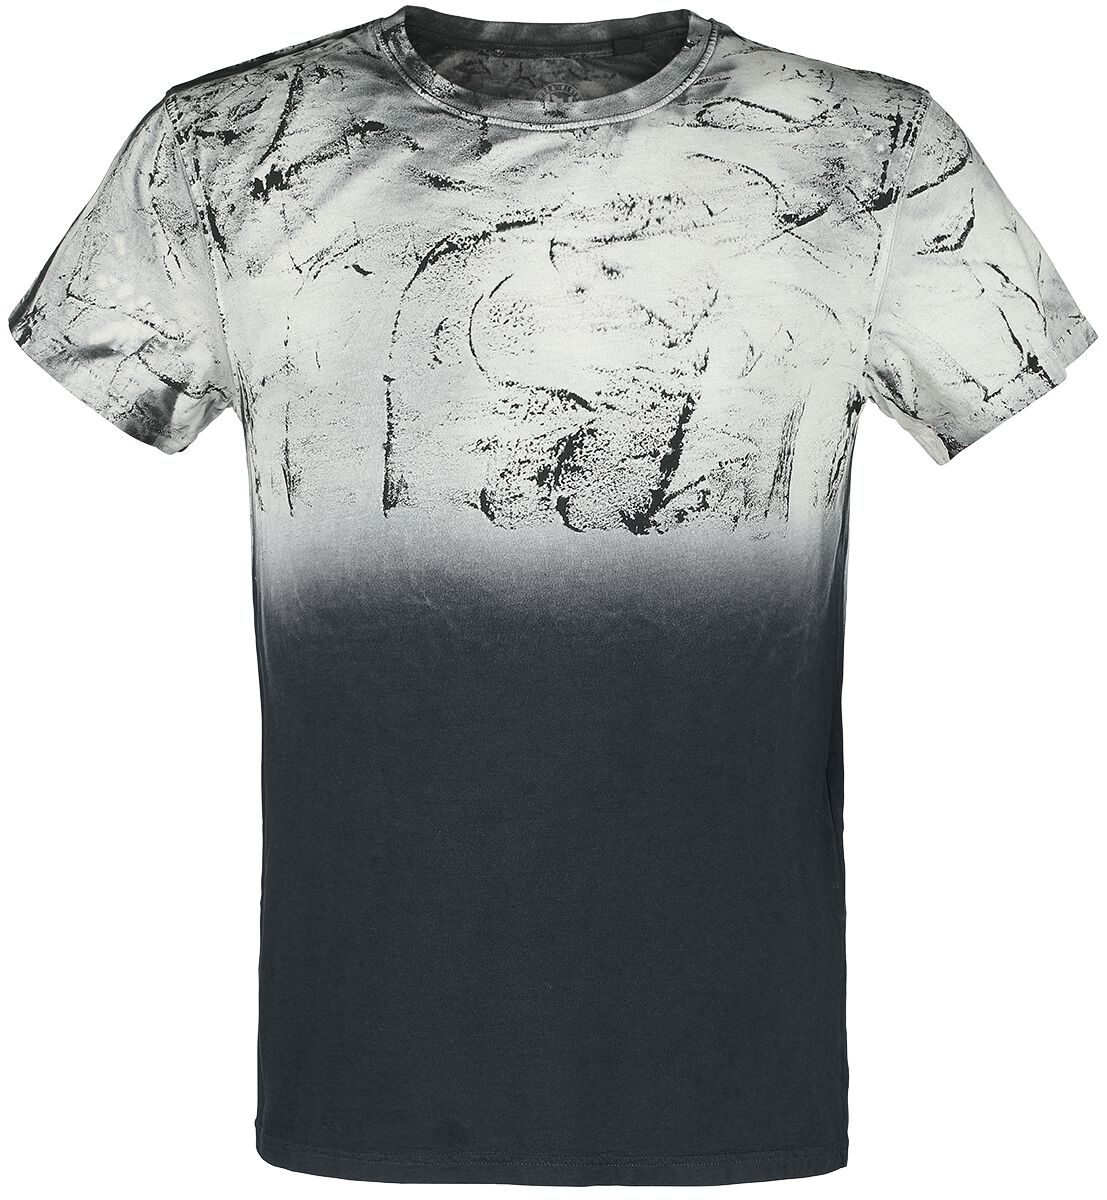 Outer Vision Man`s T-Shirt Spatolato T-Shirt schwarz grau in M